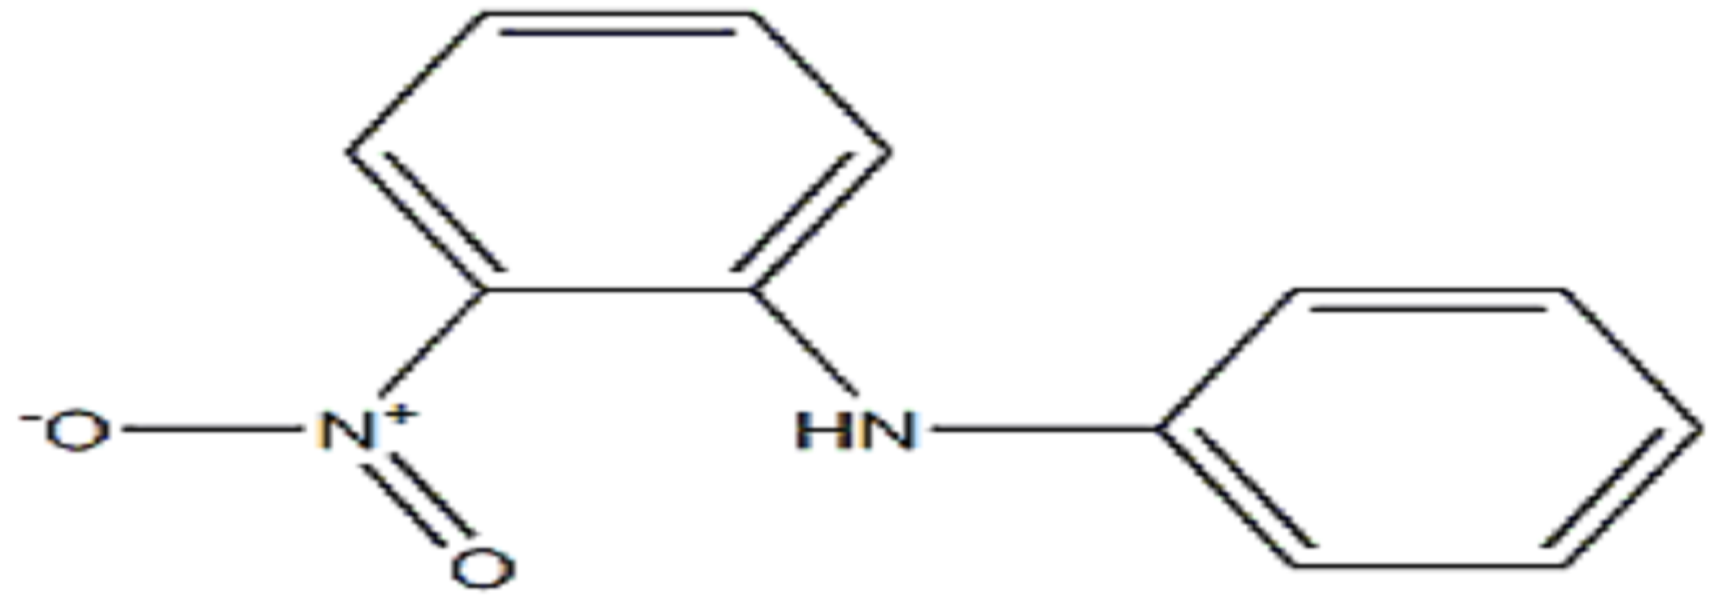 邻硝基二苯胺,2-Nitrodiphenylamine